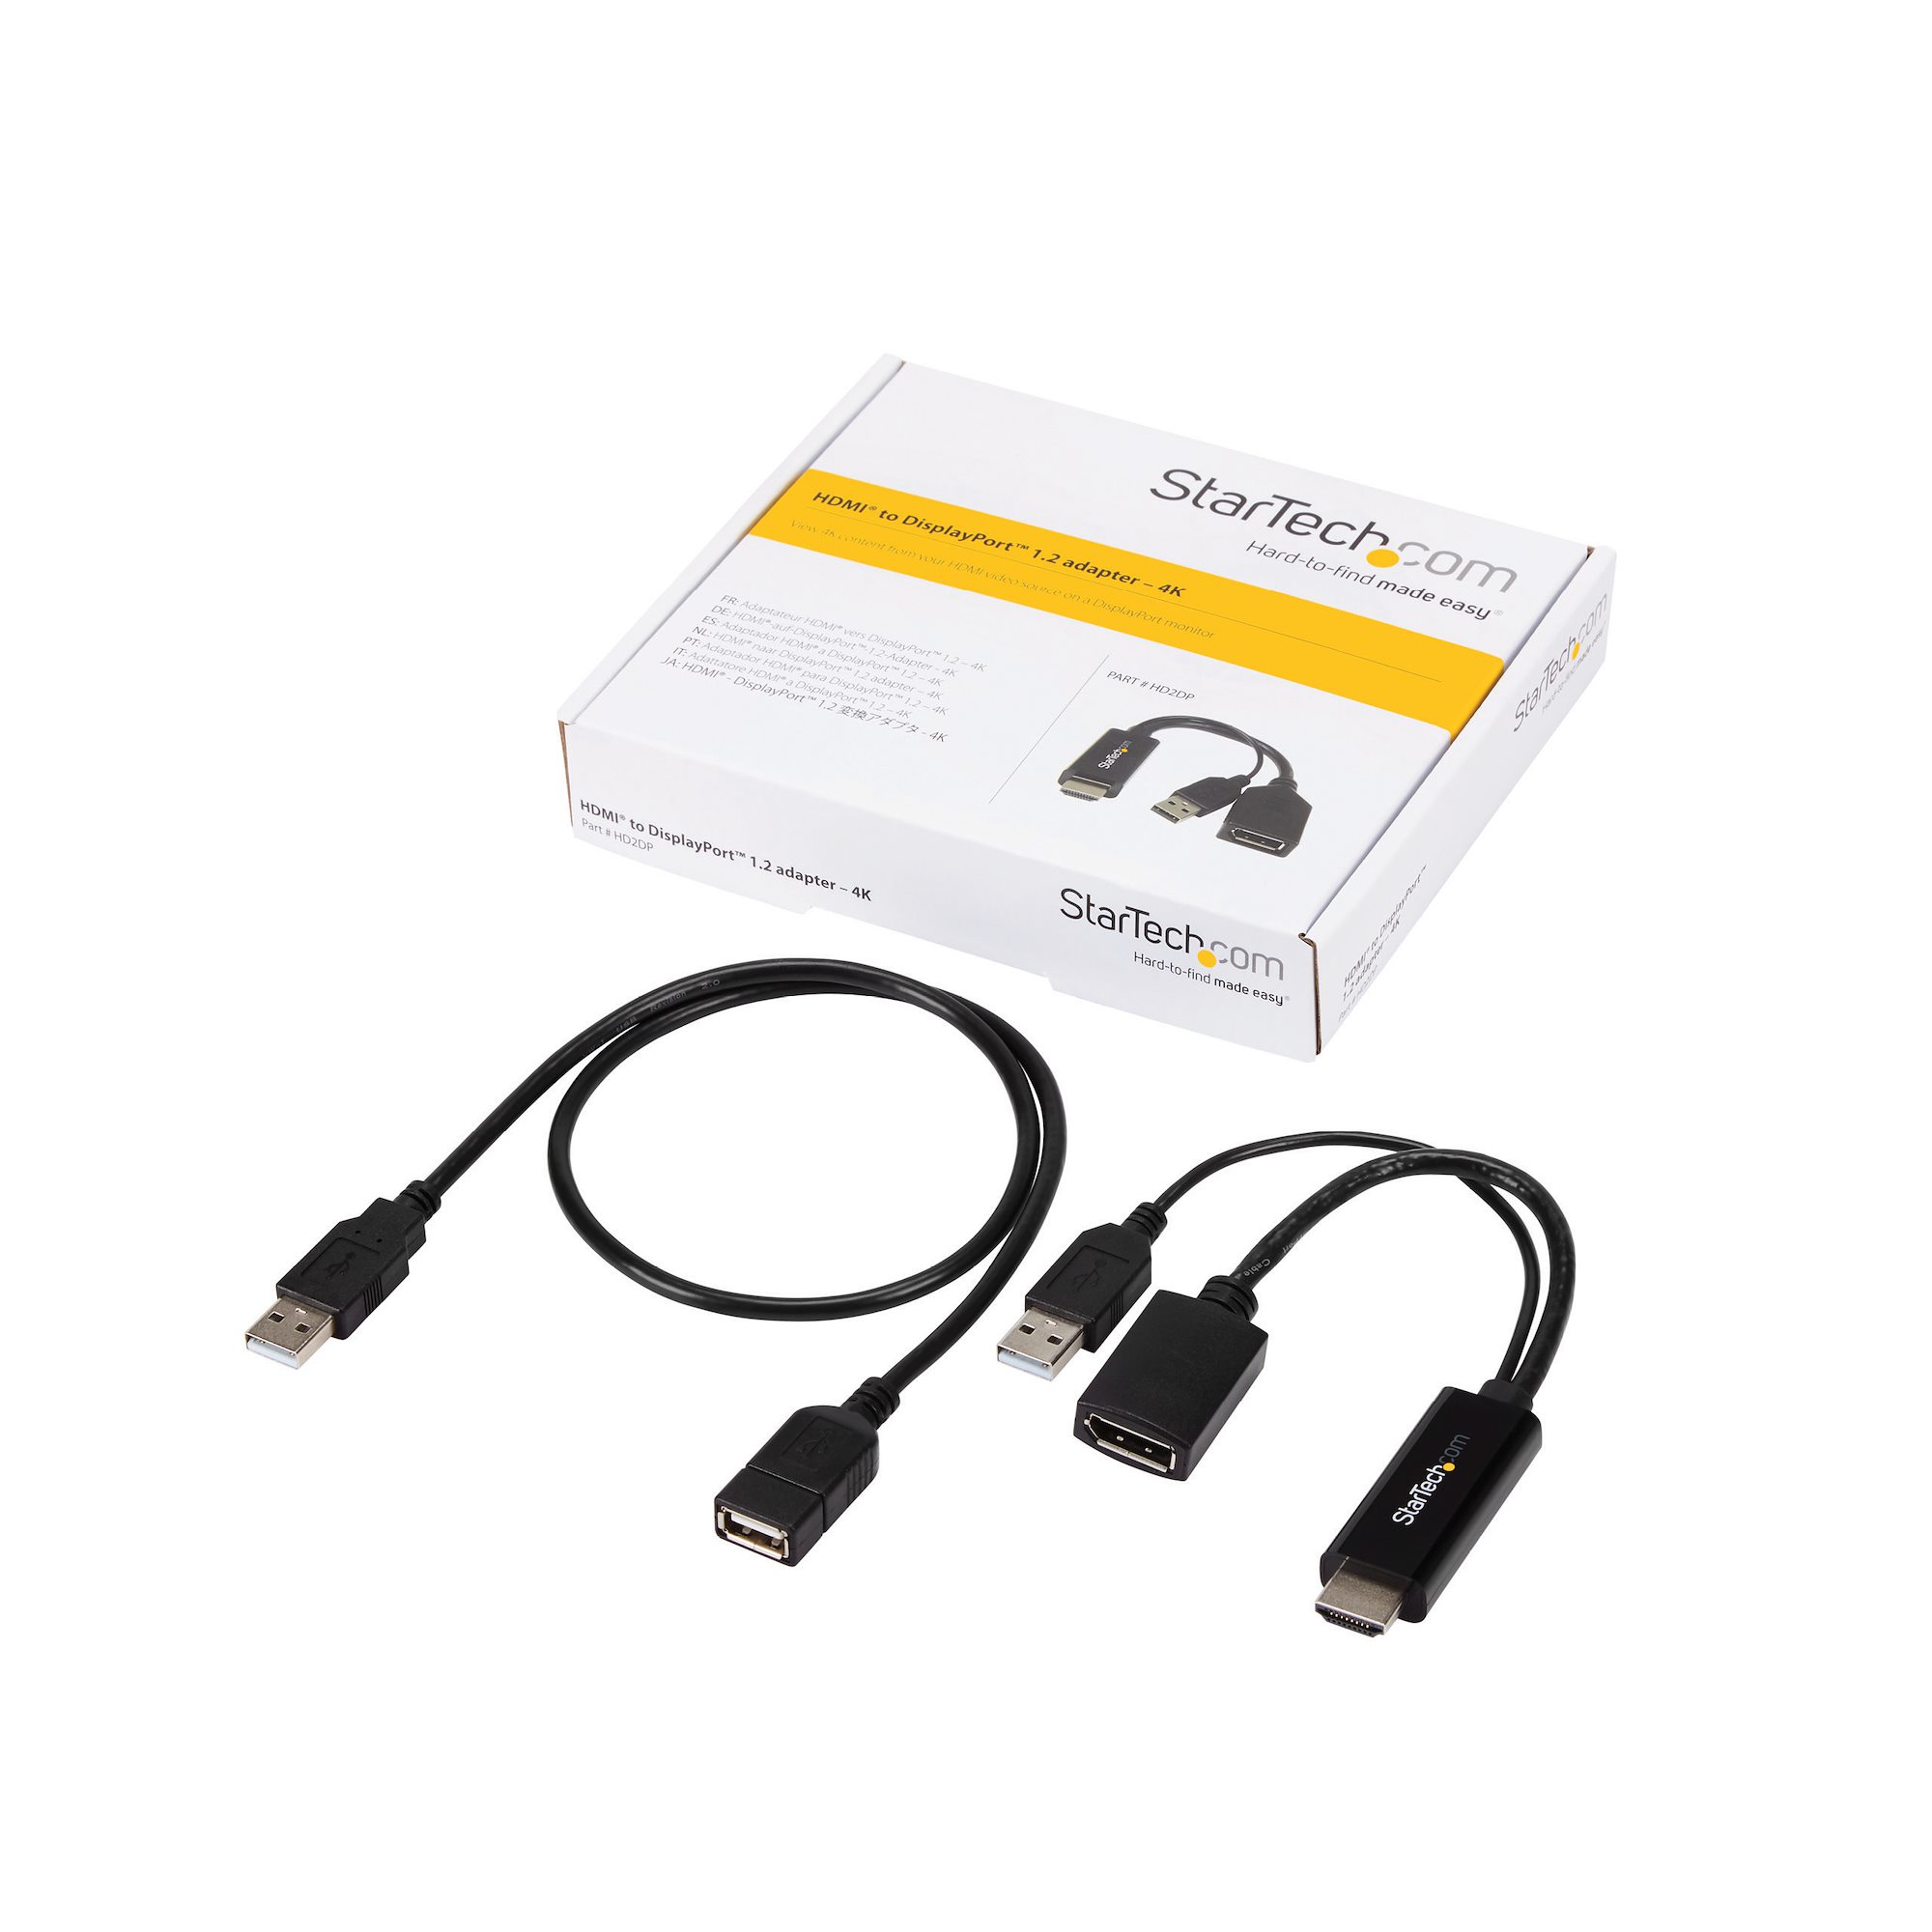 HDMI(入力) - DisplayPort(出力)変換アダプタ 4K解像度 - StarTech.com